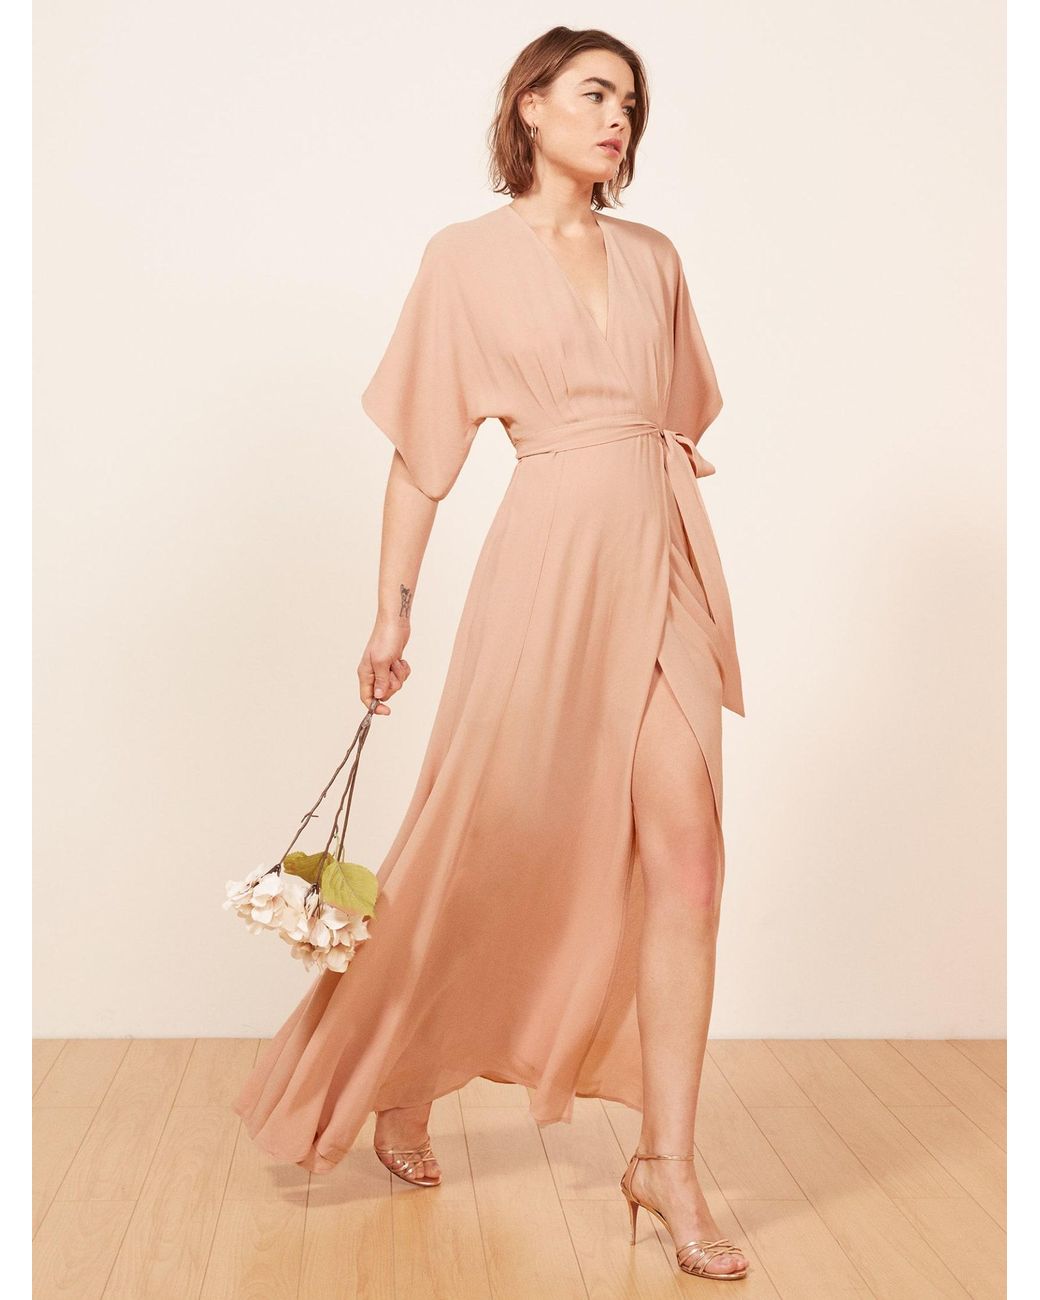 Reformation Winslow Dress in Blush (Pink) - Lyst